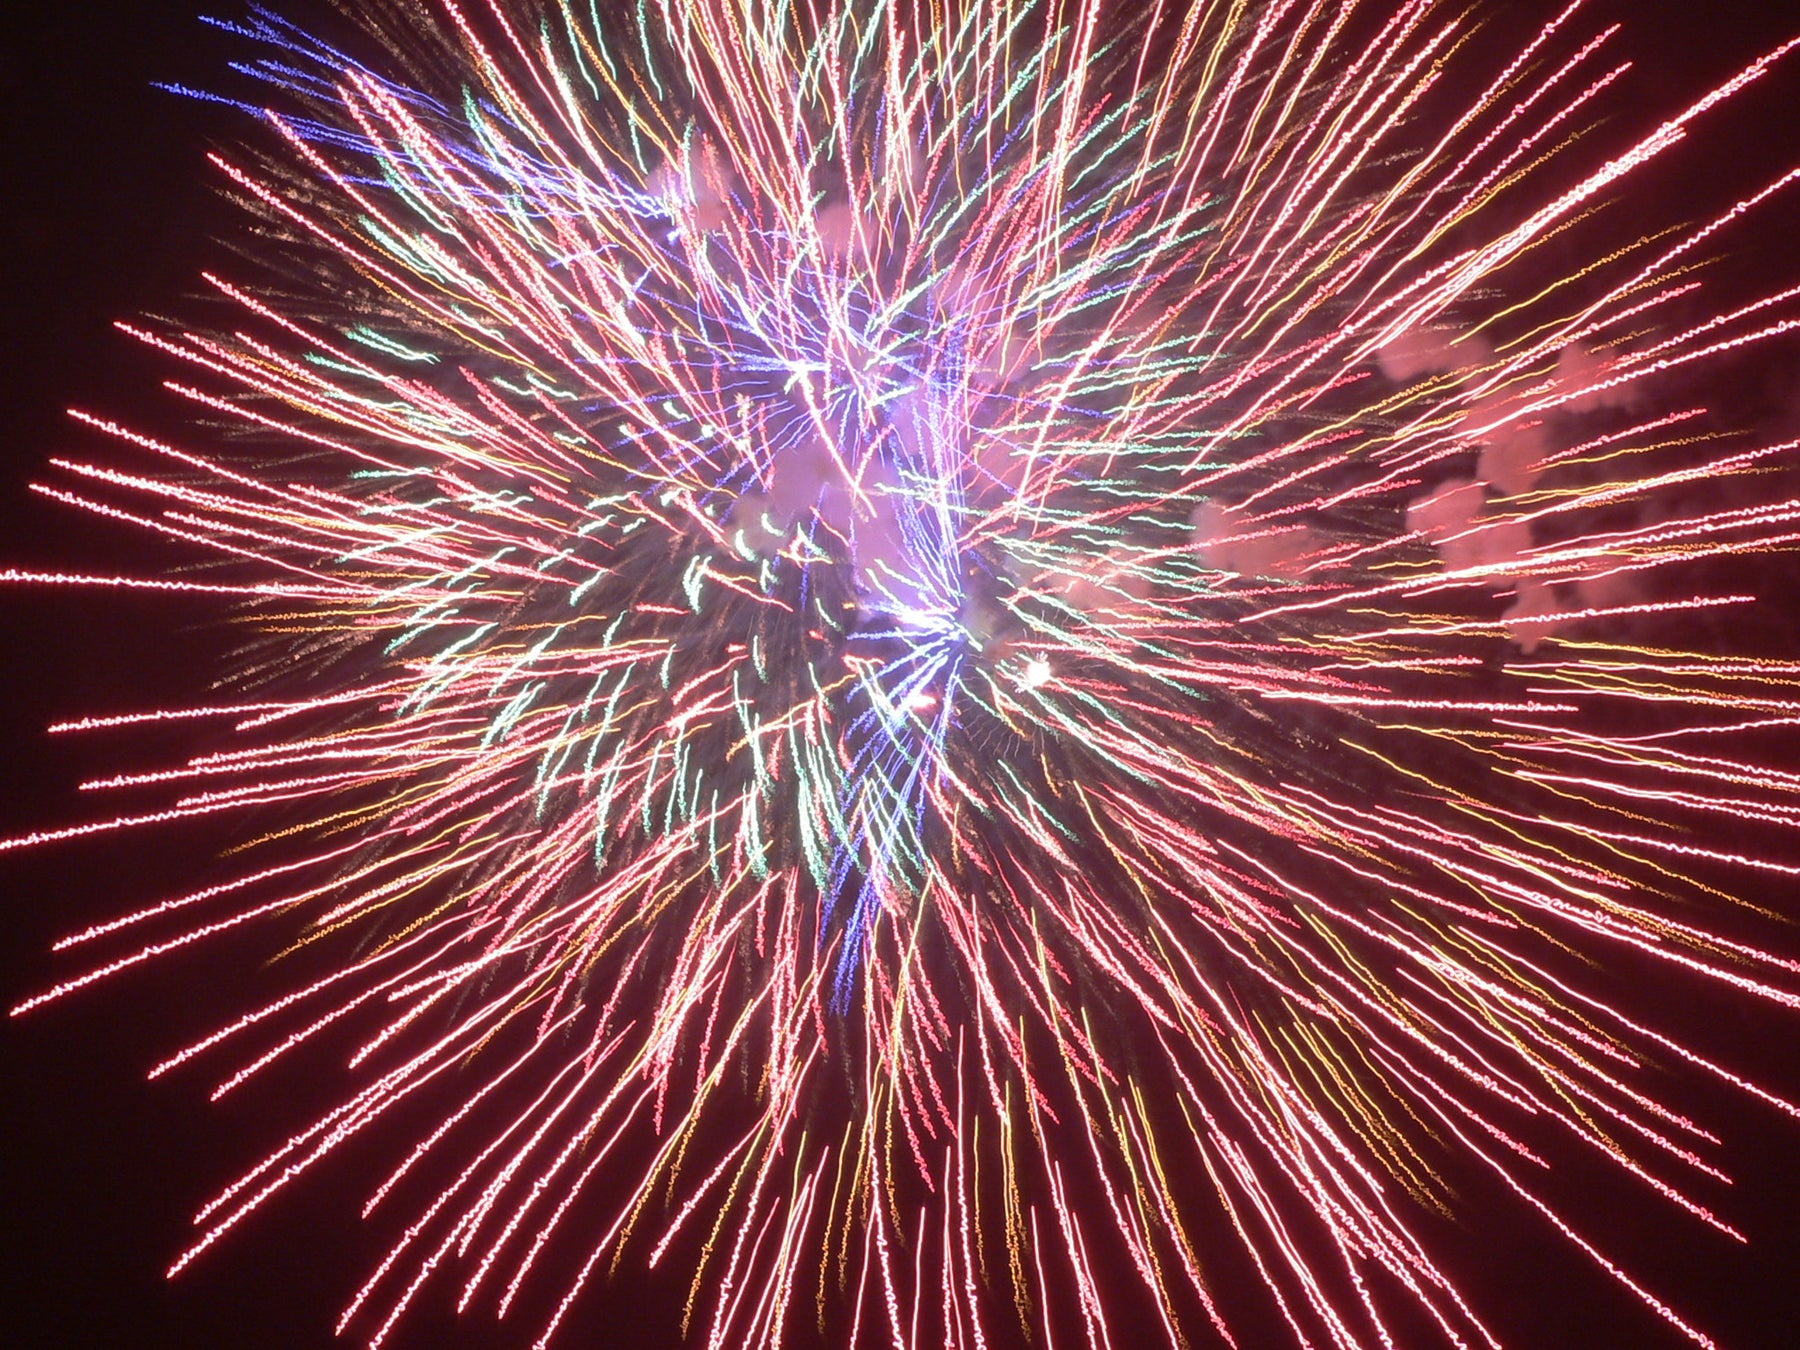 Malta Fireworks Festival facing an uncertain future